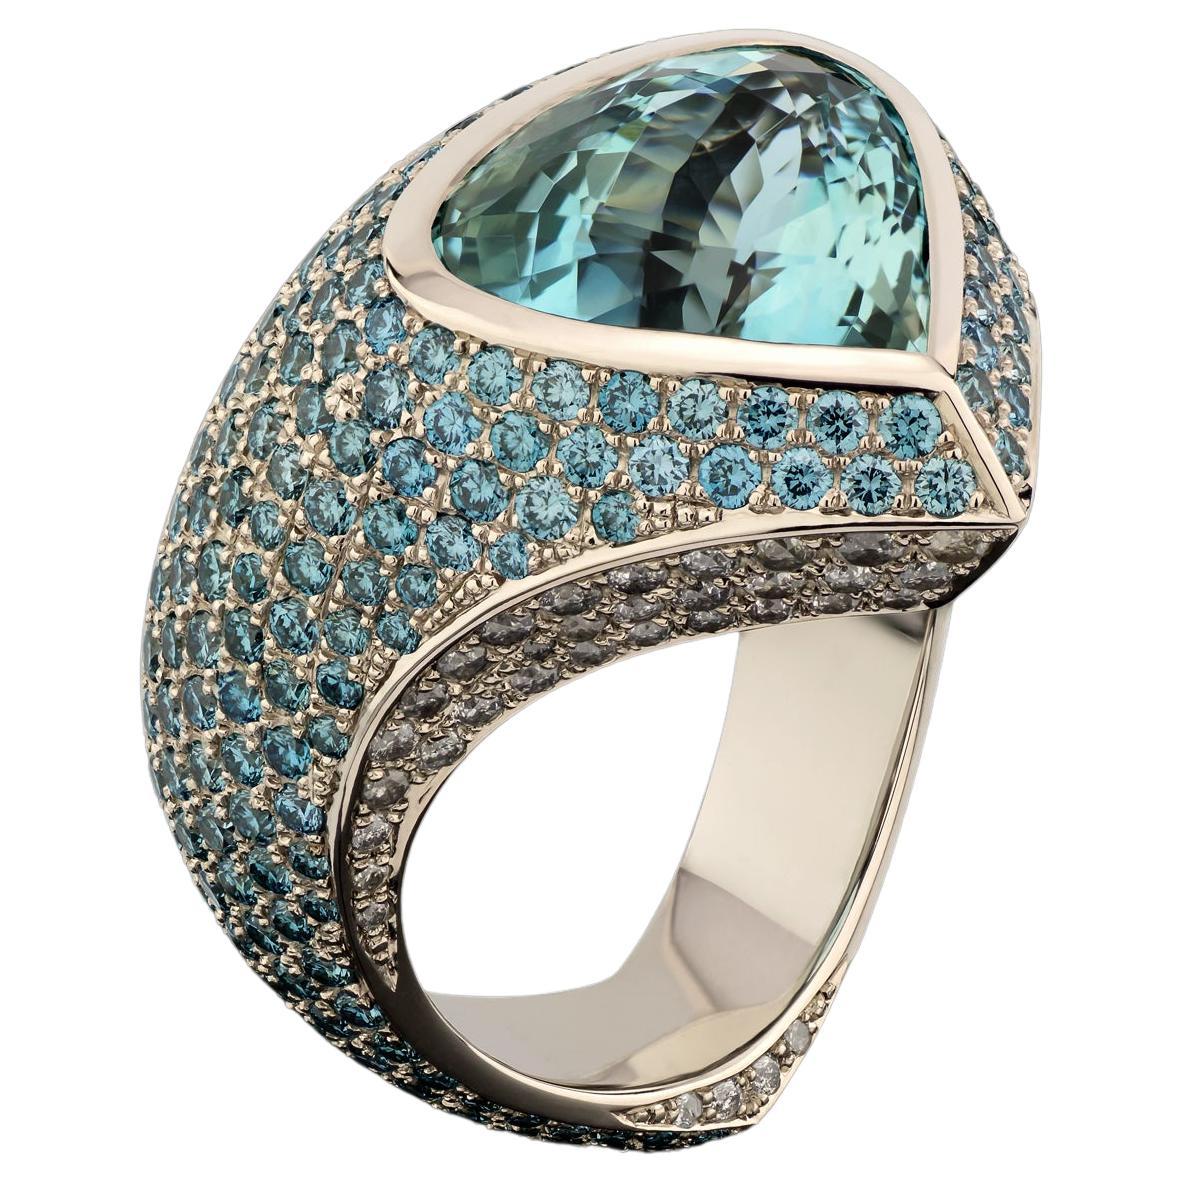 Aquamarine Cocktail Ring 6.24ct Blue, 18k White Gold, 357 hand set diamonds For Sale